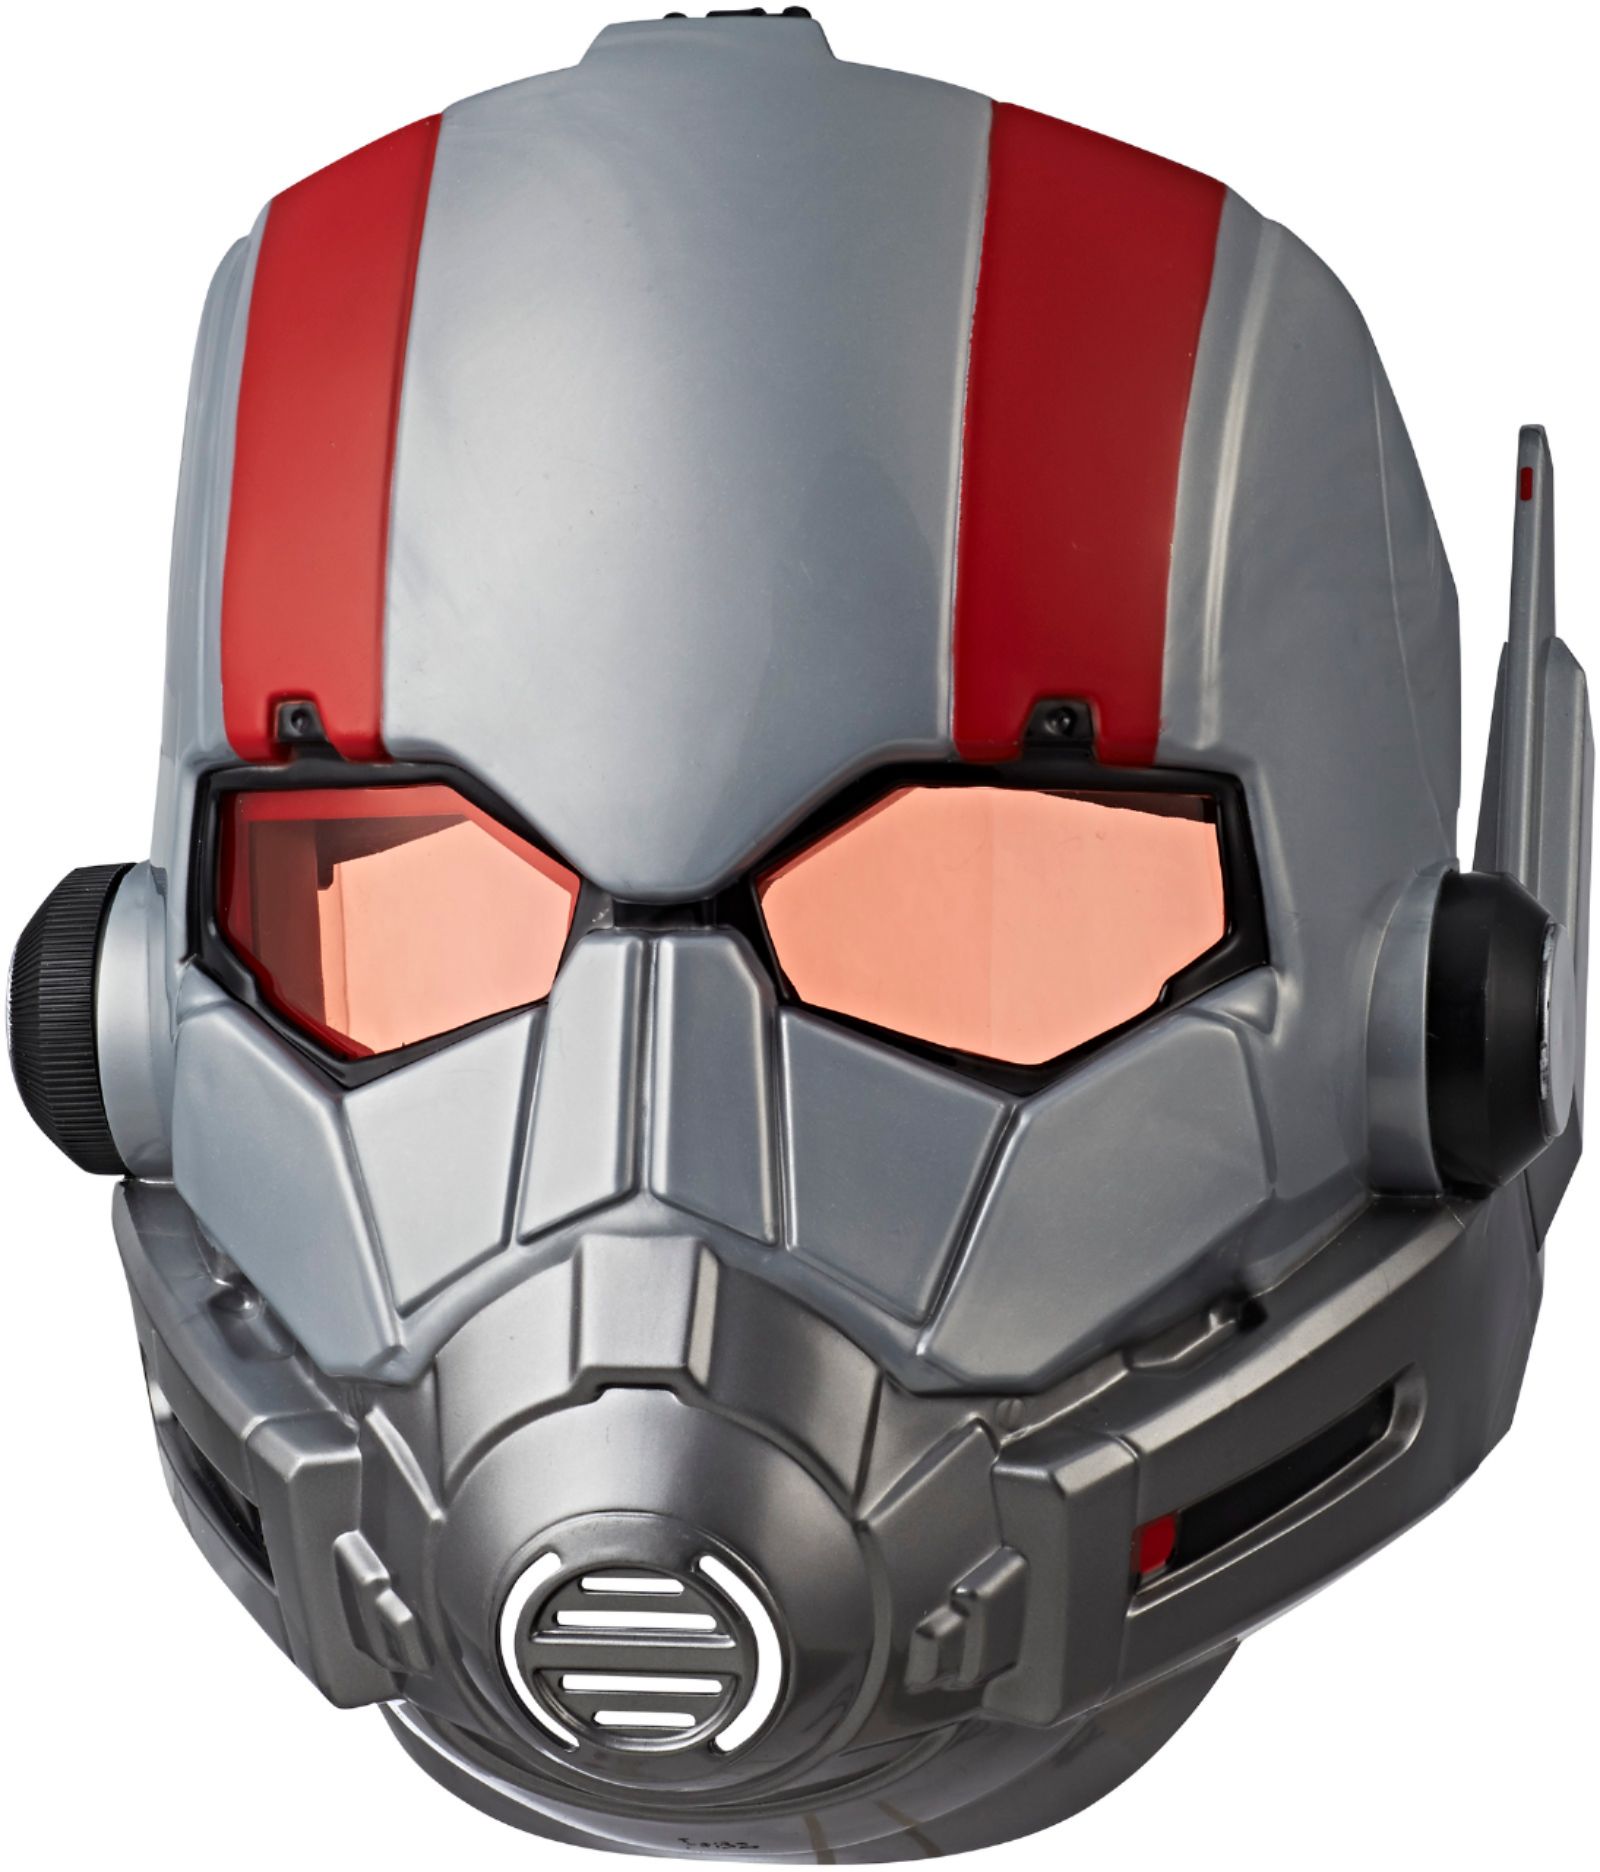 The Avengers Avengers E0842EU4 Marvel Wasp 3-in-1 Ant-Man Vision Mask